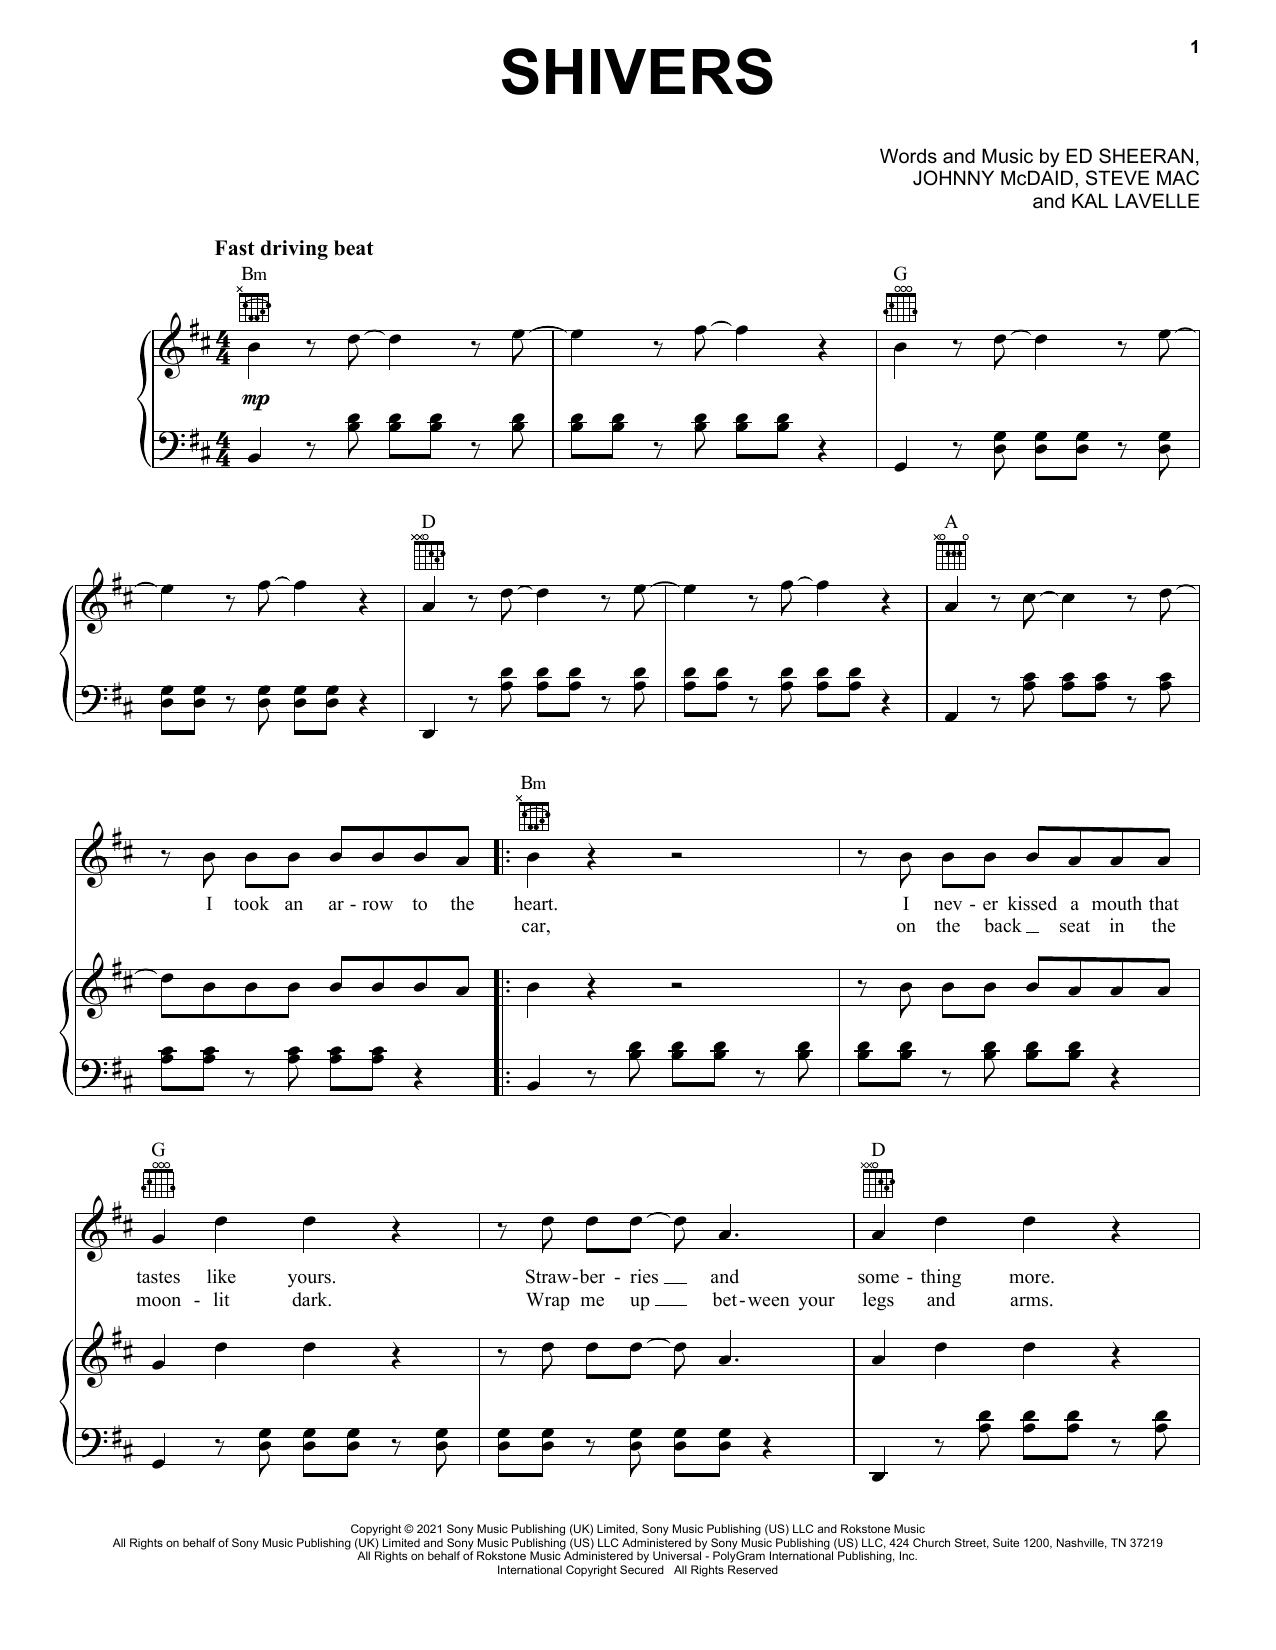 Ed Sheeran Shivers Sheet Music Notes & Chords for Easy Piano - Download or Print PDF